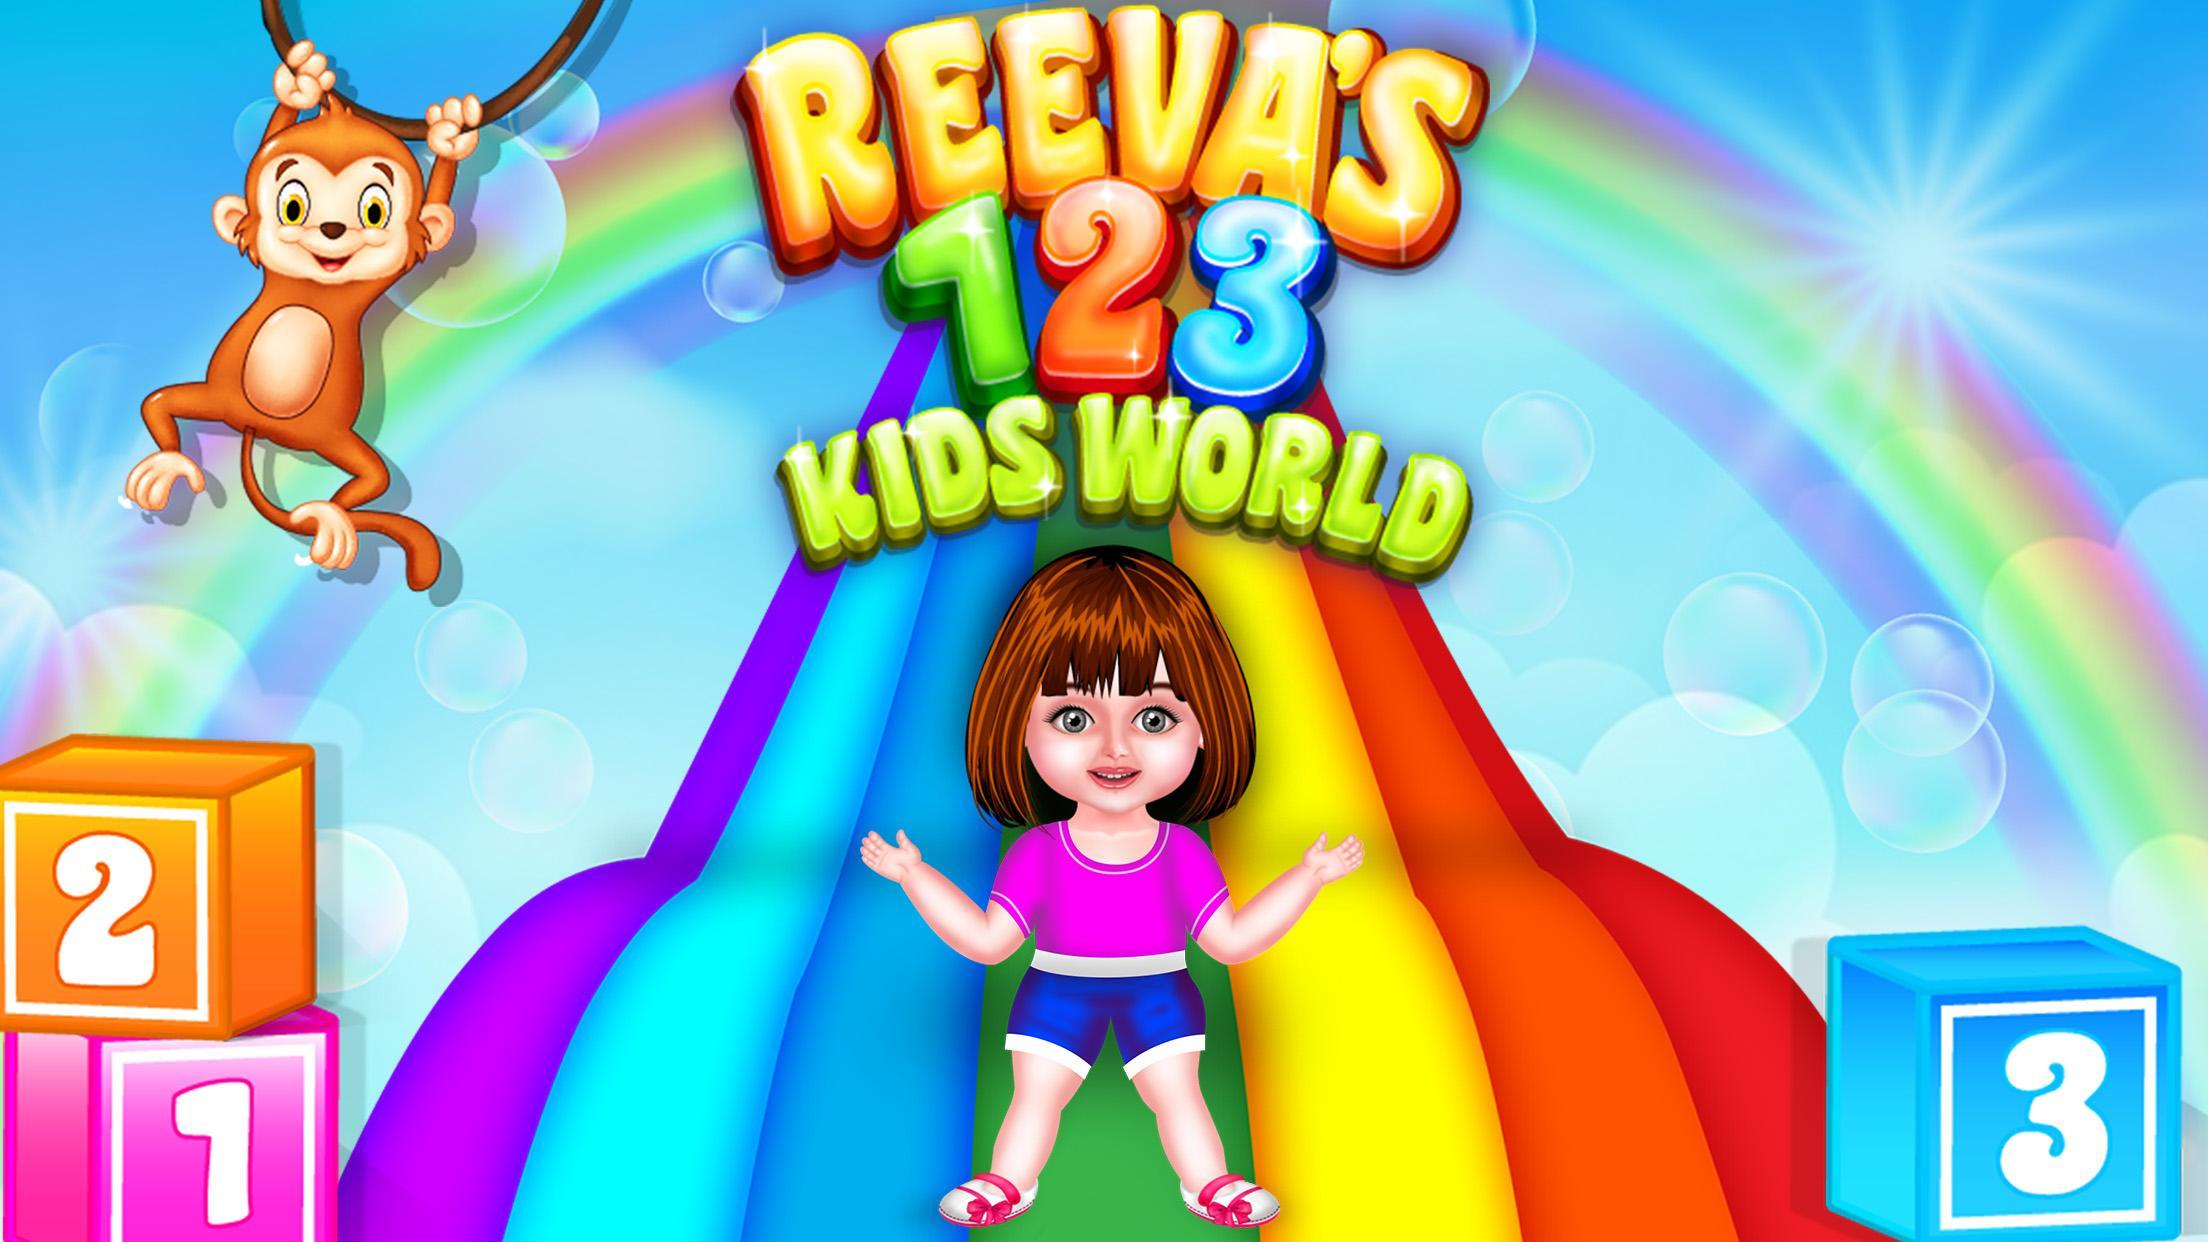 Child world 2. Kids World игра. Tracing numbers 123 counting game for Kids. Tracking numbers 123 counting game for Kids. Игра Попс ворлд 123 уровень.